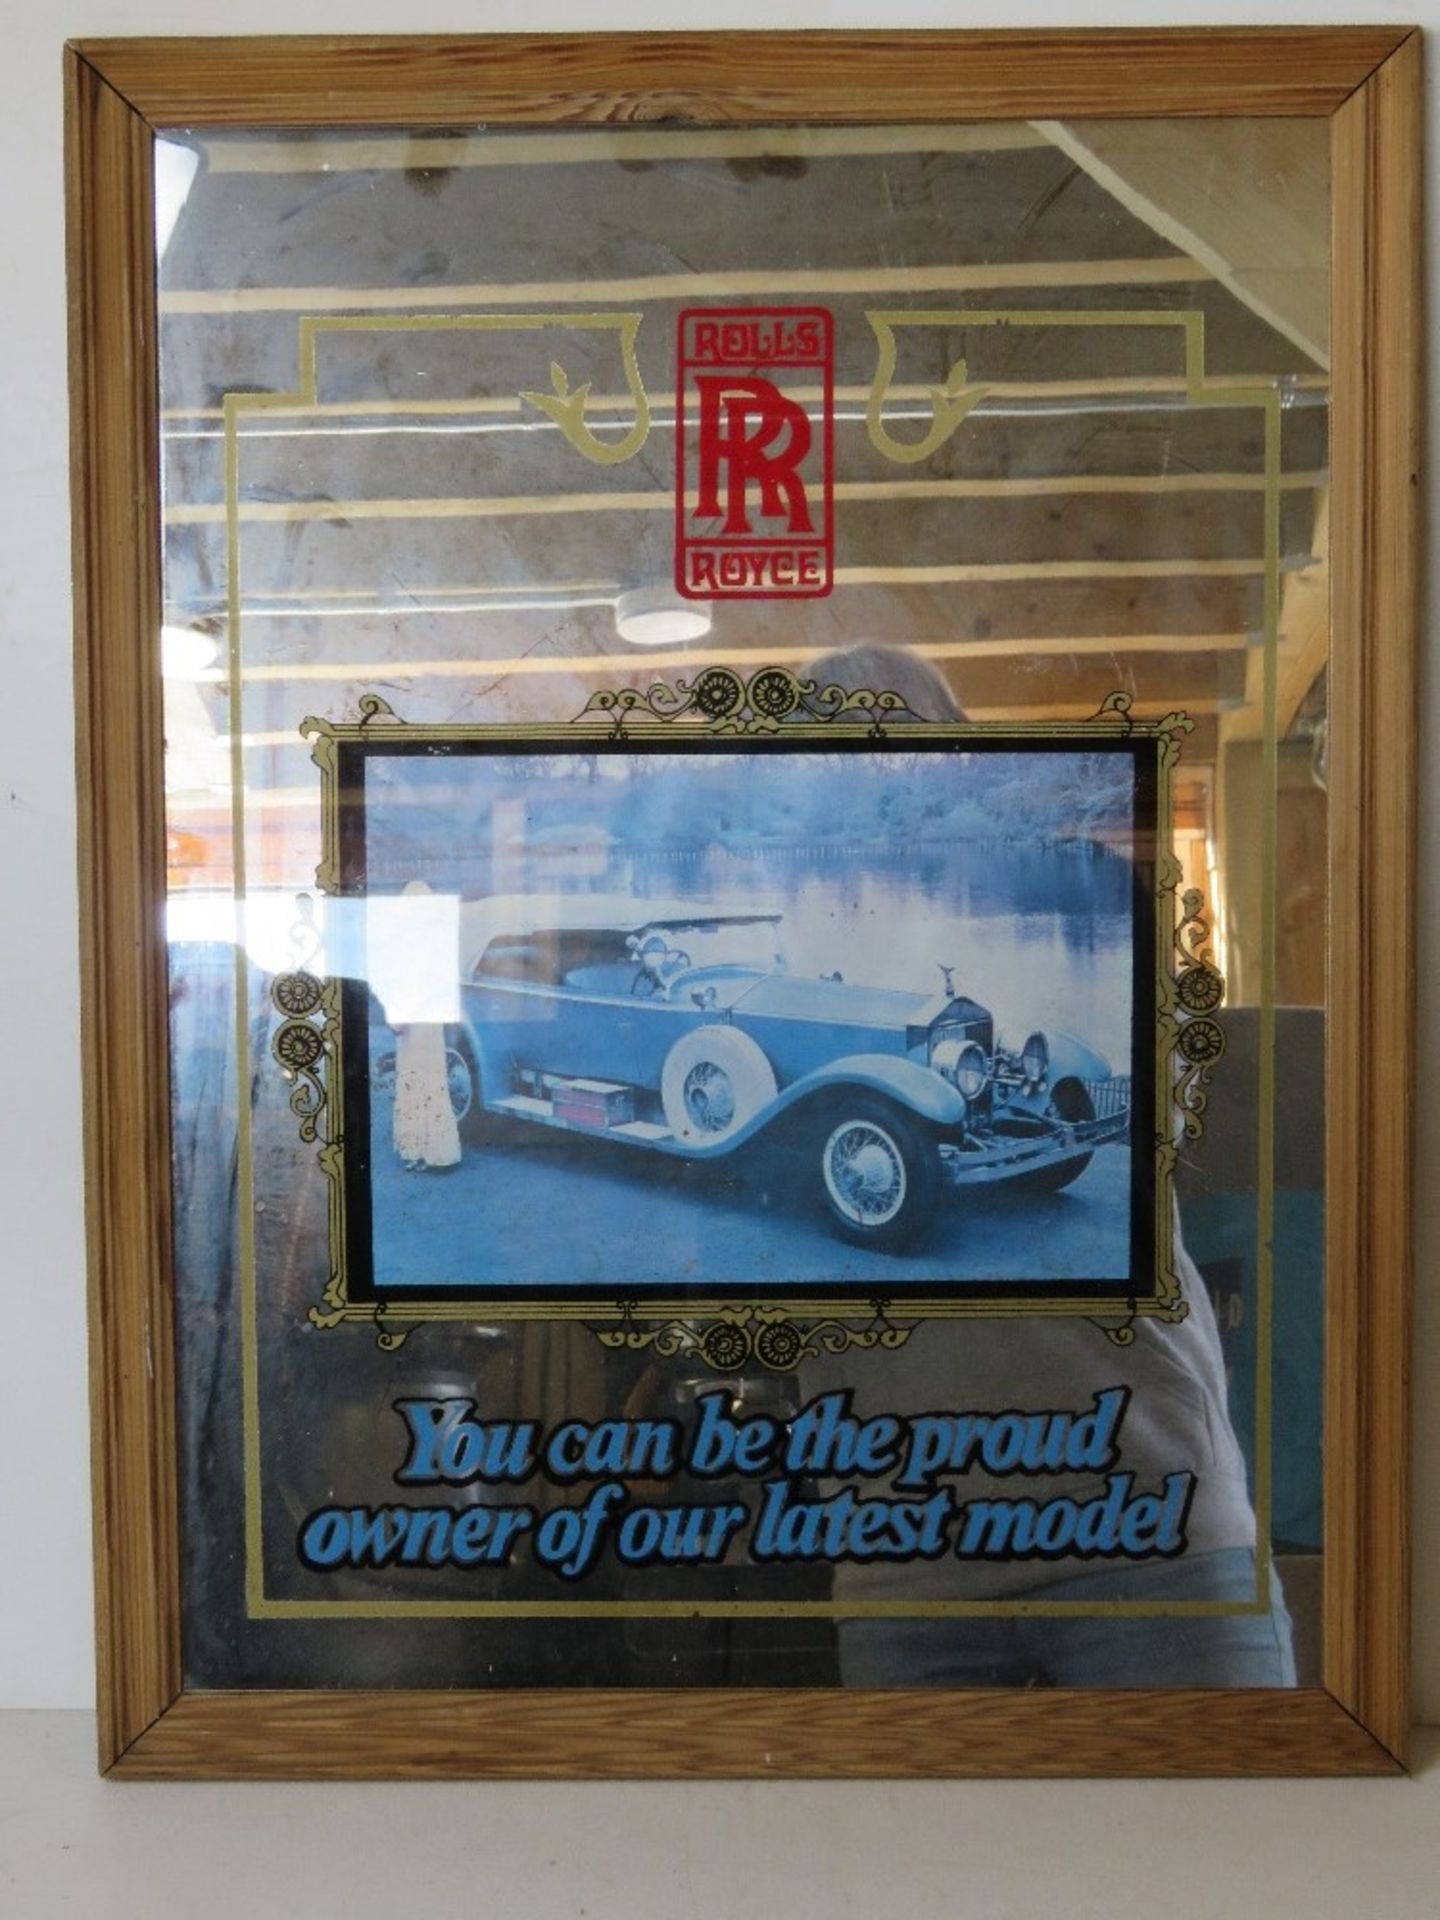 A Rolls Royce advertising mirror in pine